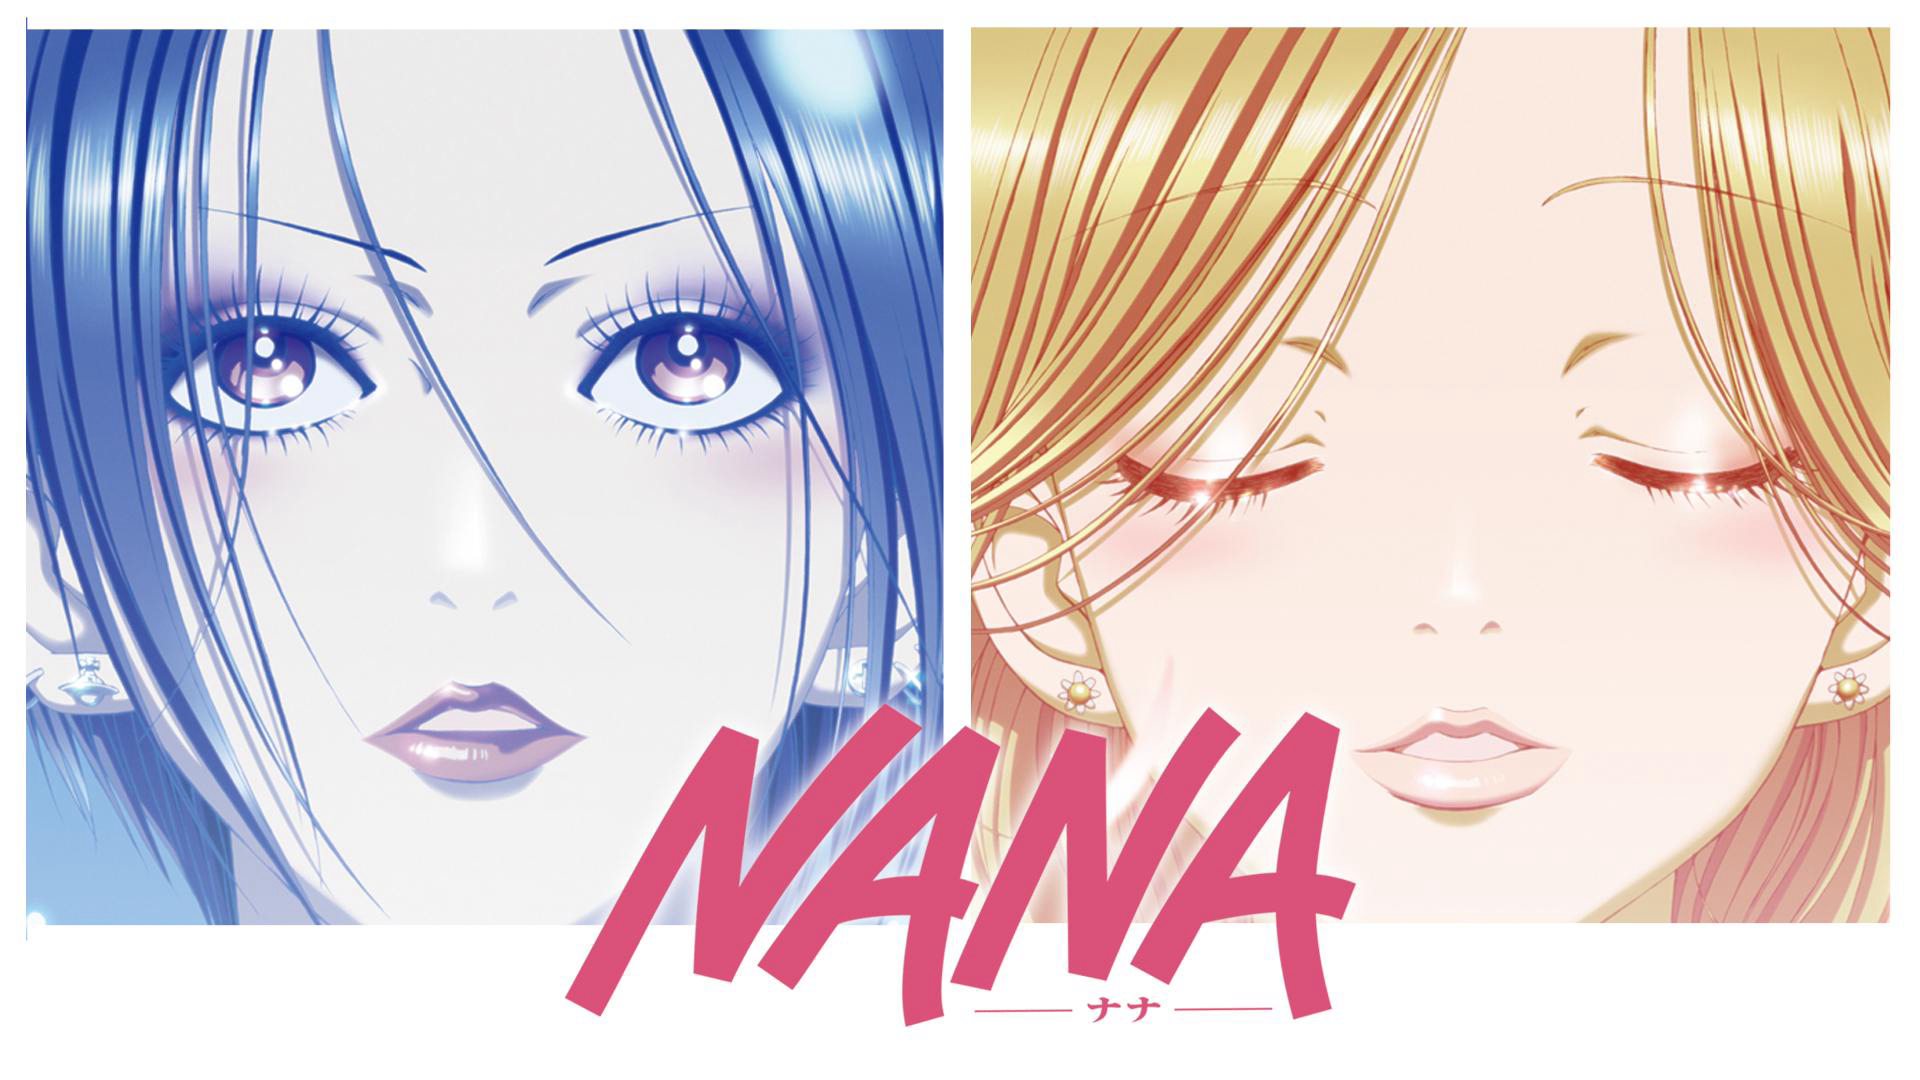 NANA - NANA (2006)